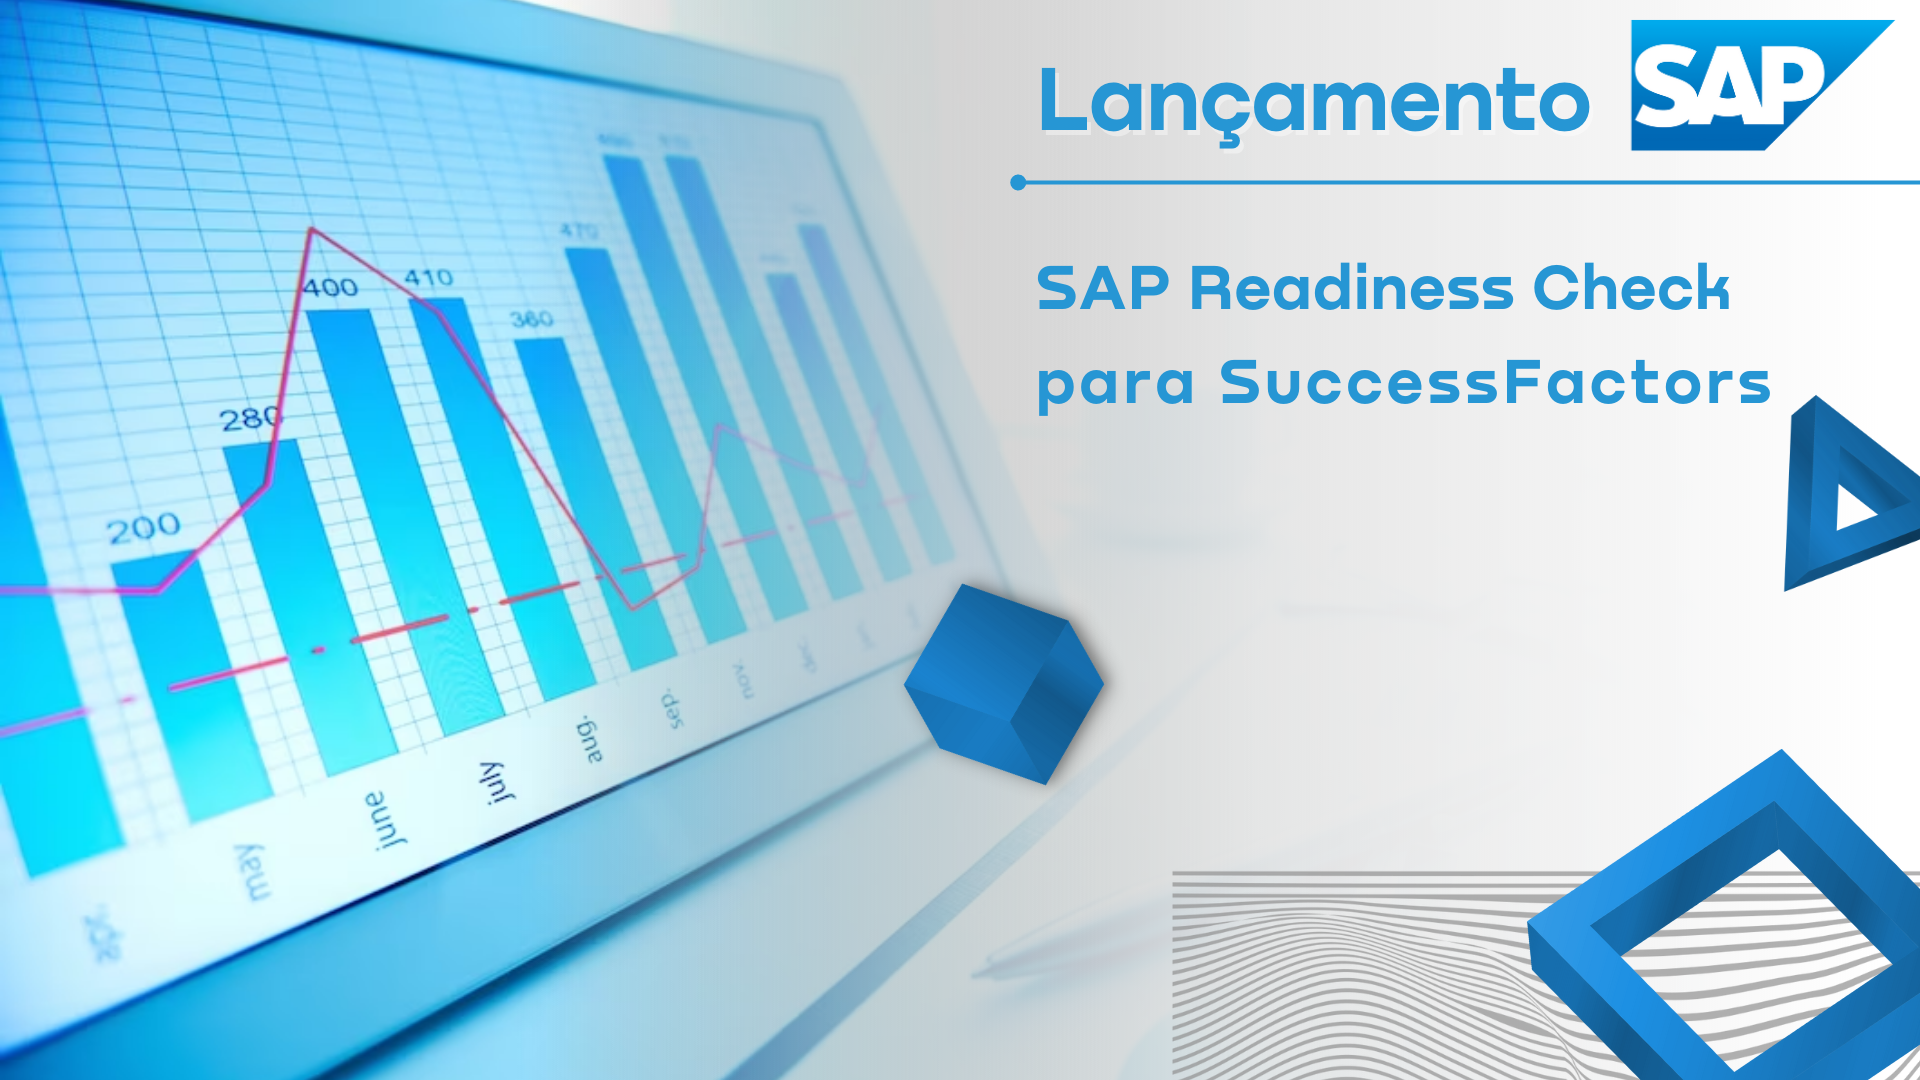 Lançamento SAP: Readiness Check para SAP SuccessFactors